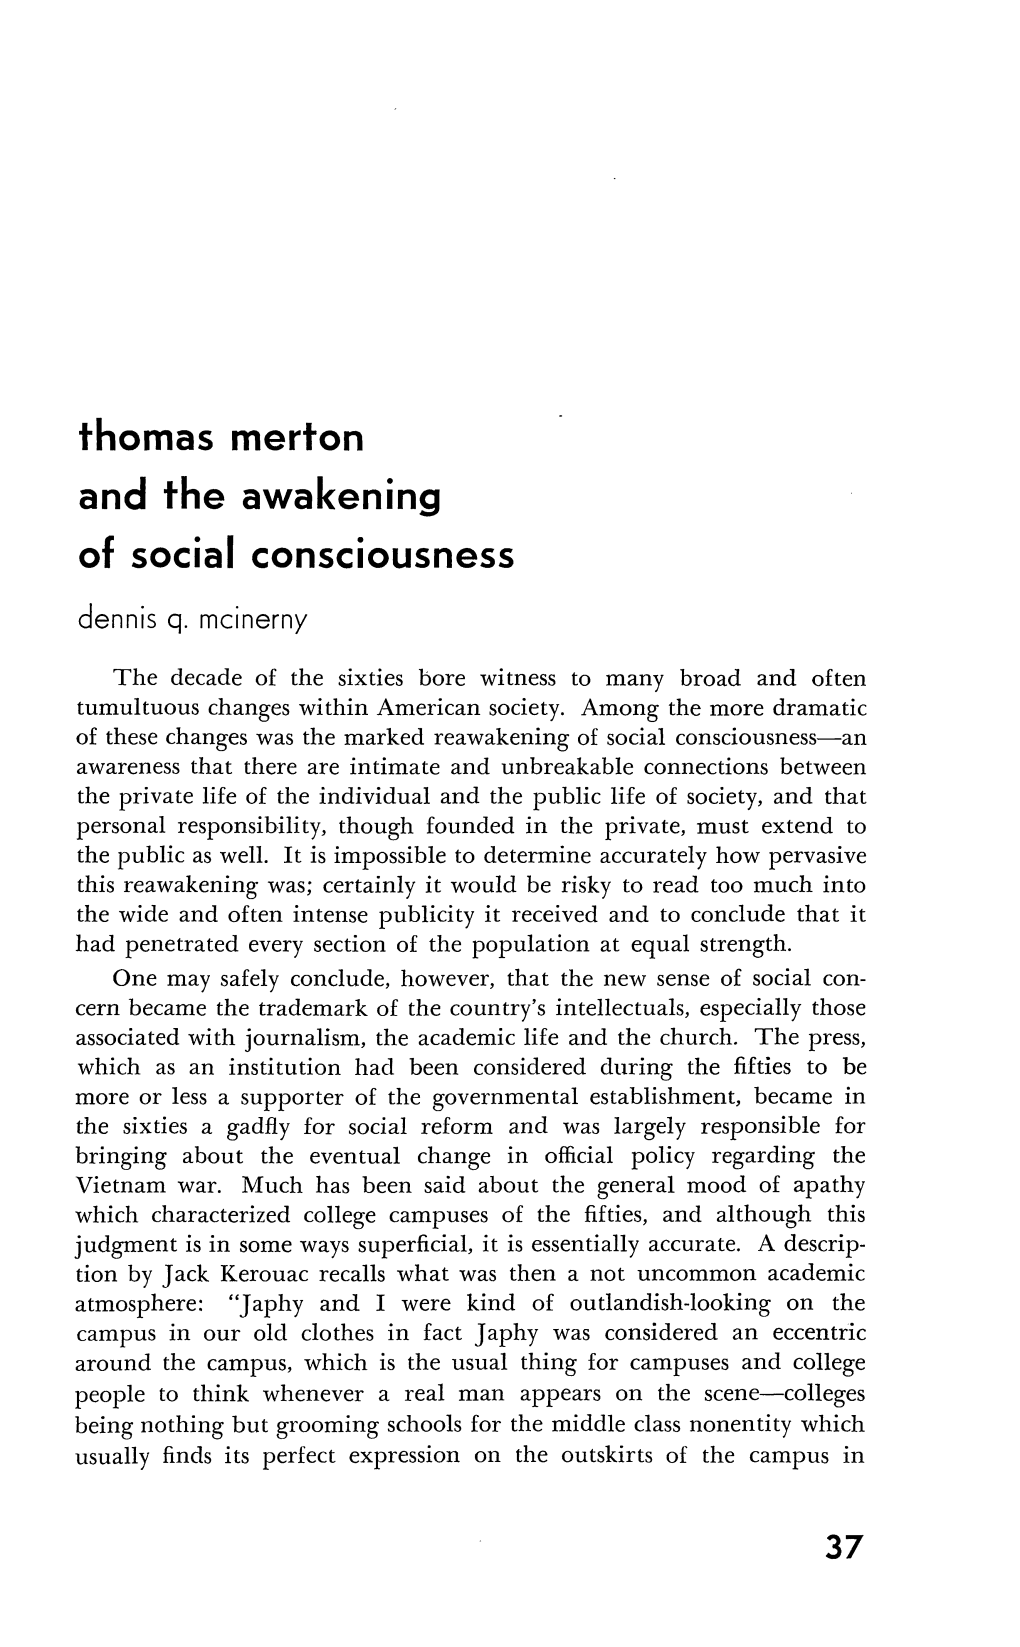 Thomas Merton and the Awakening of Social Consciousness Dennis Q